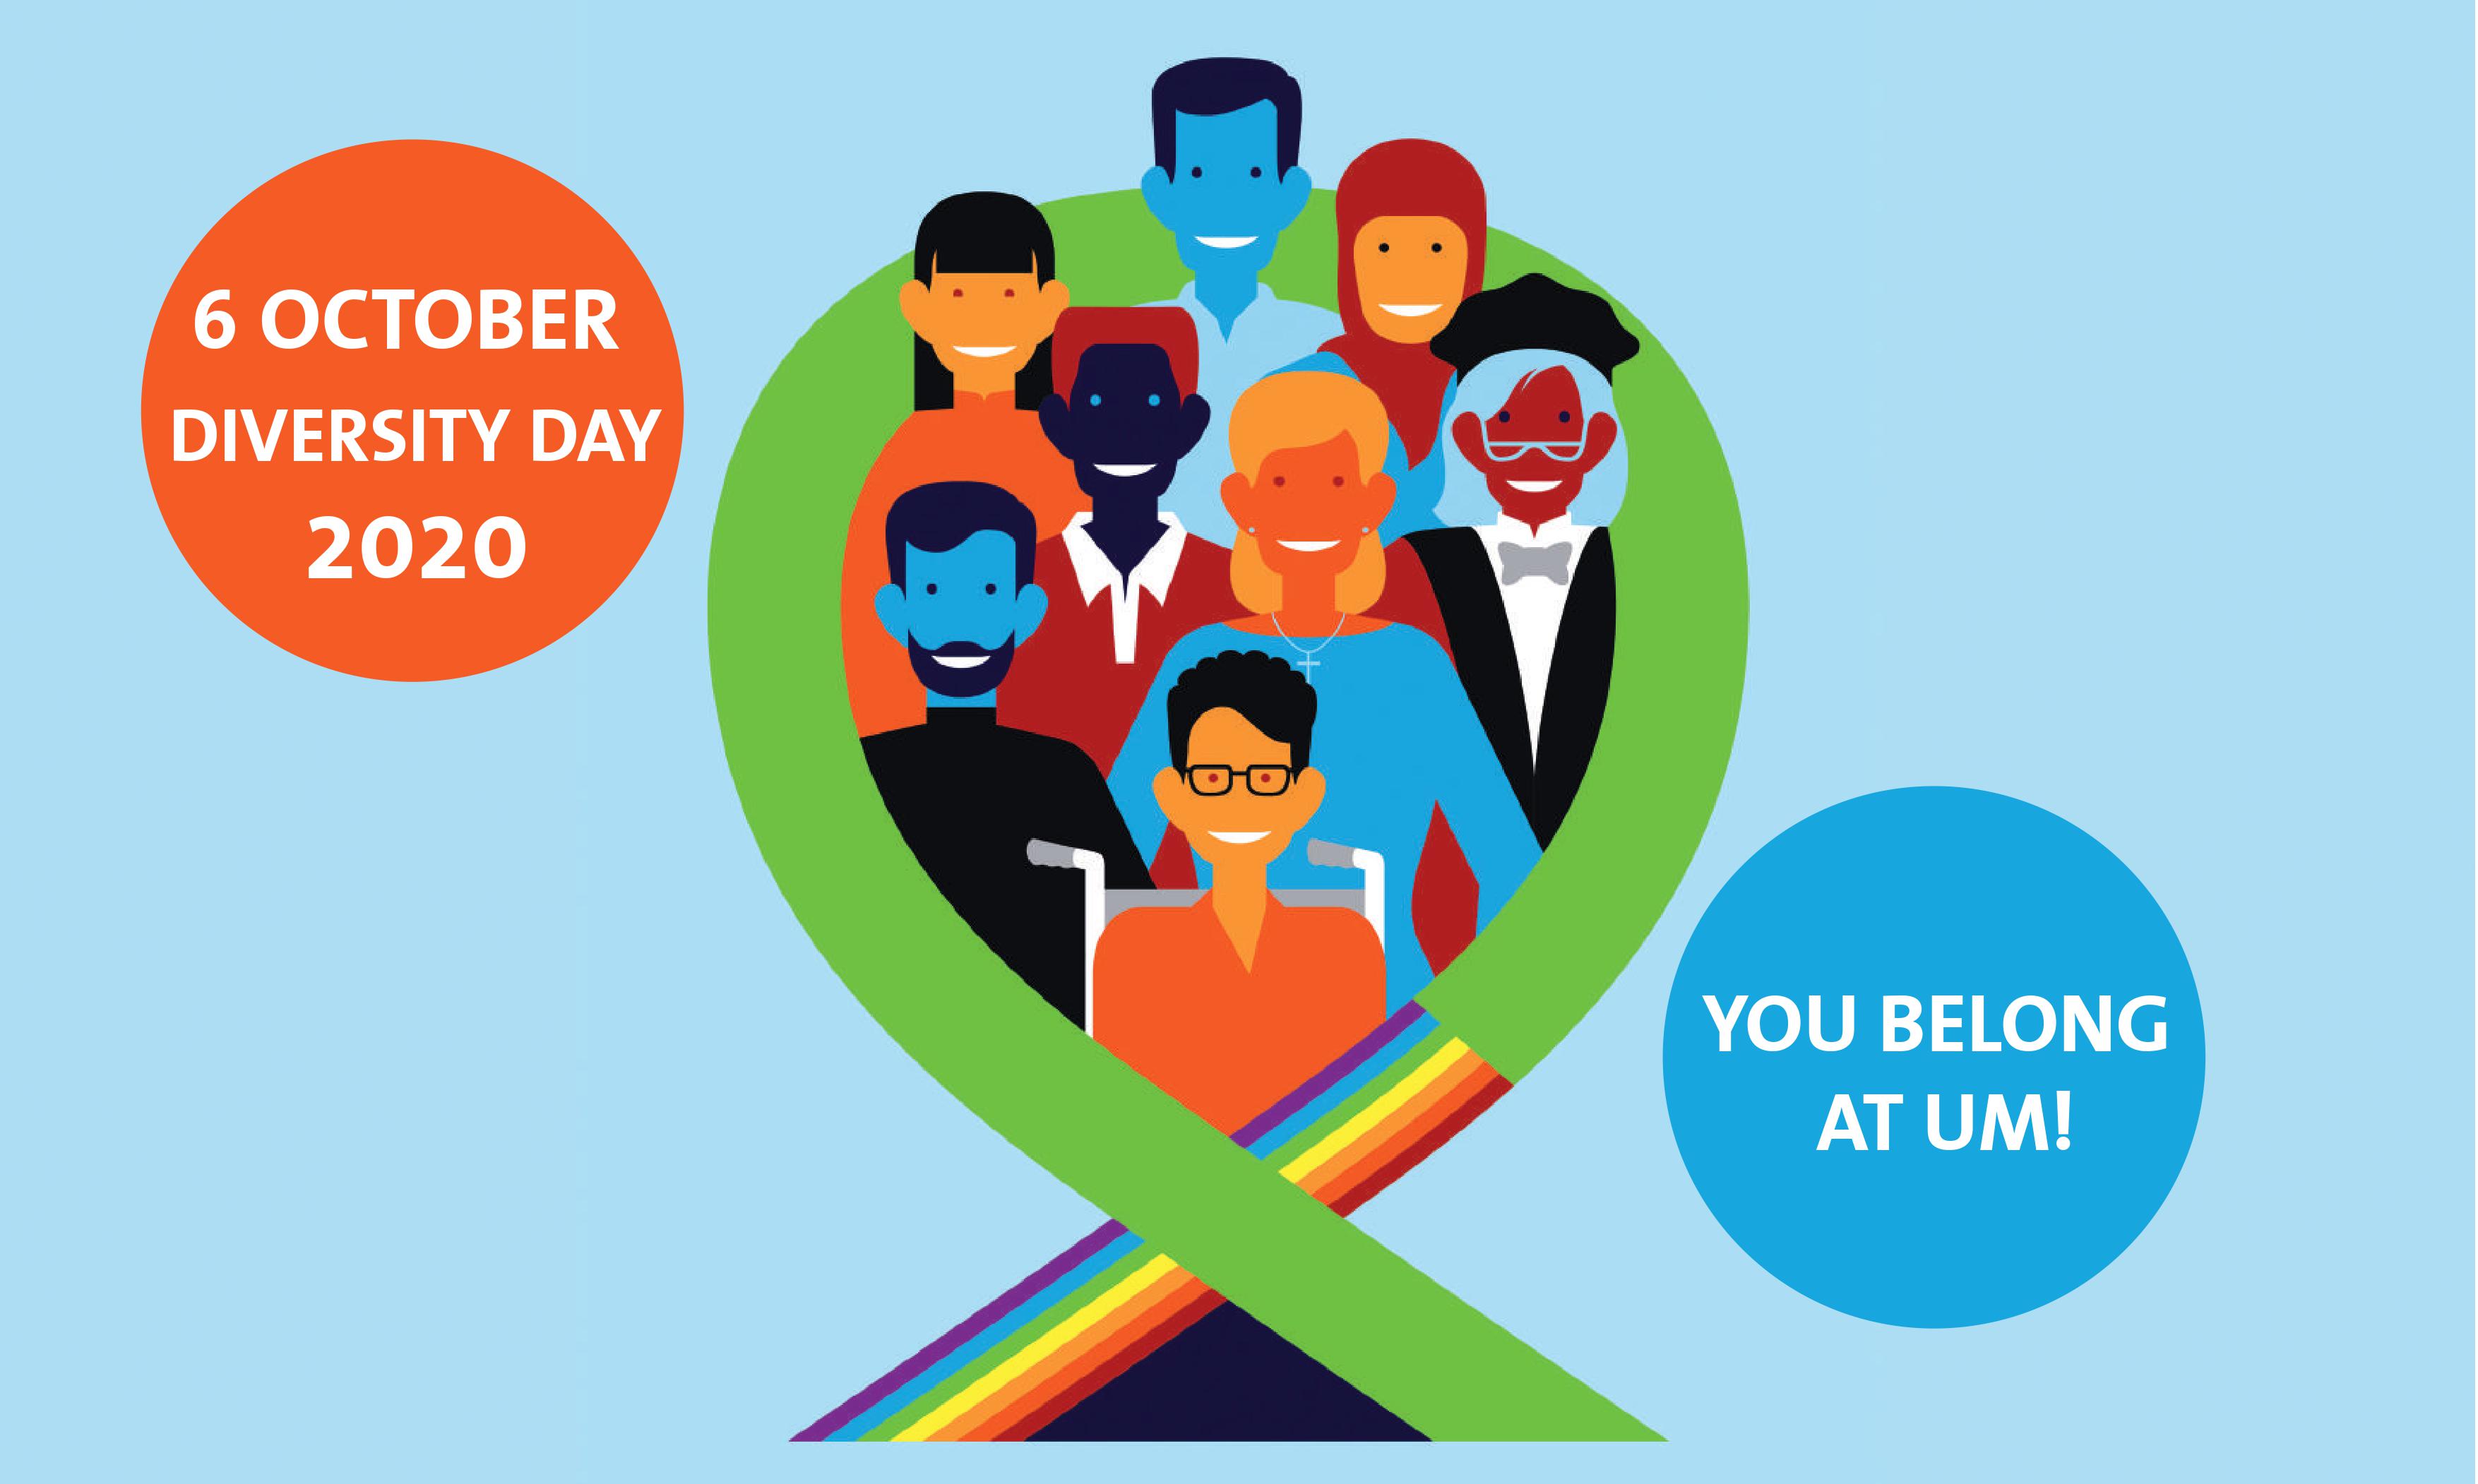 Diversity Day 2020 - You belong at UM!